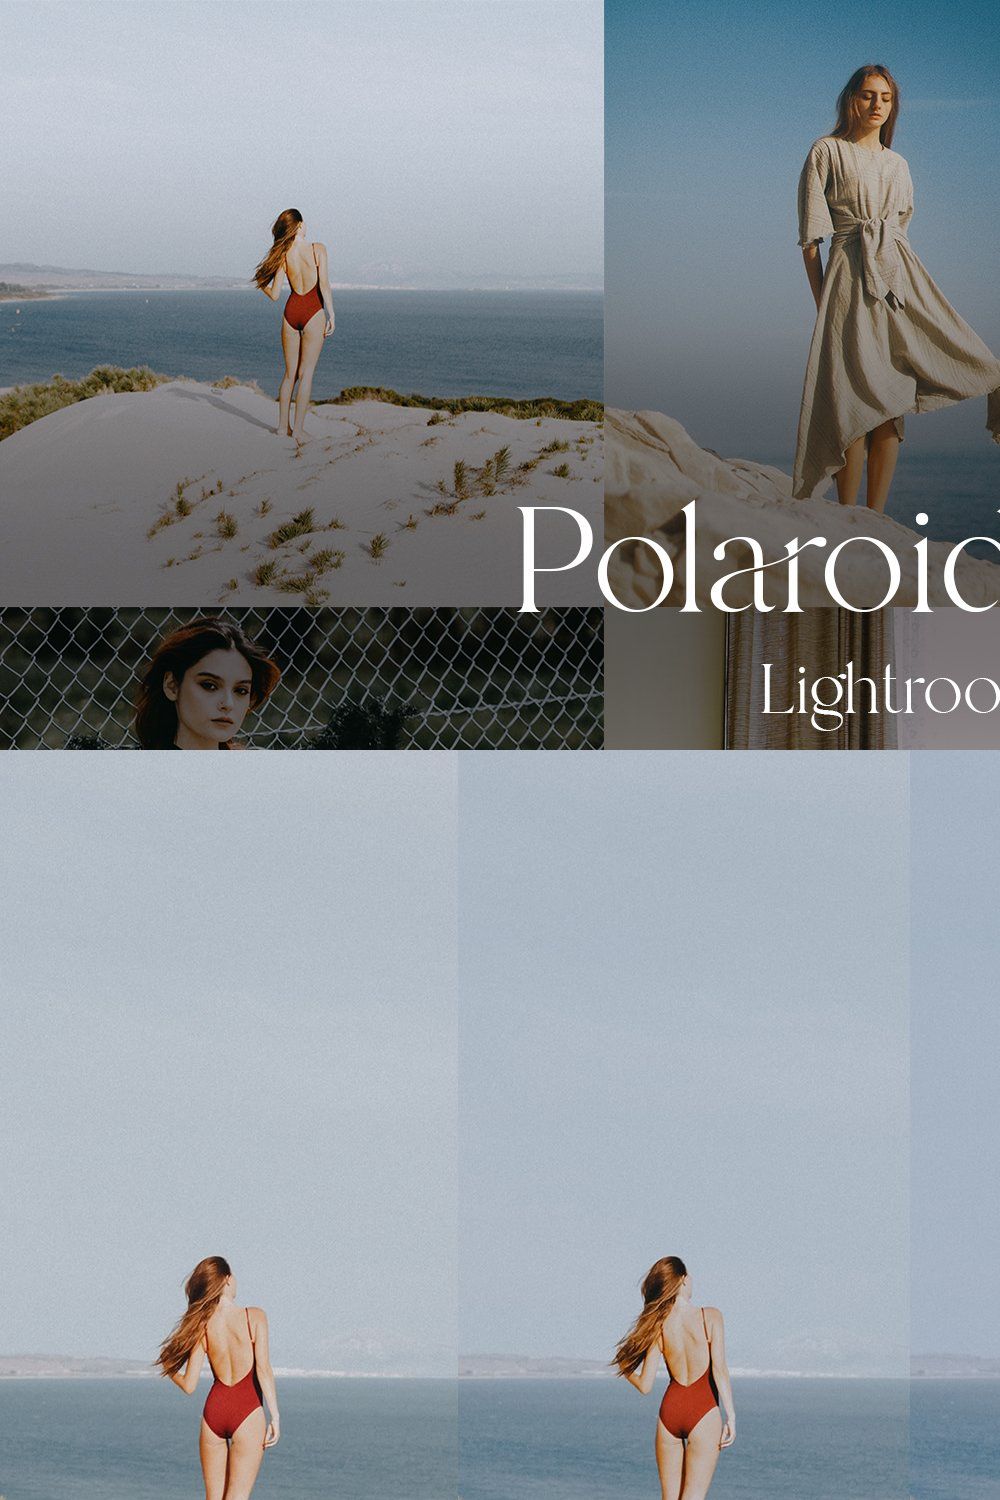 Polaroid 600 — Lightroom pinterest preview image.